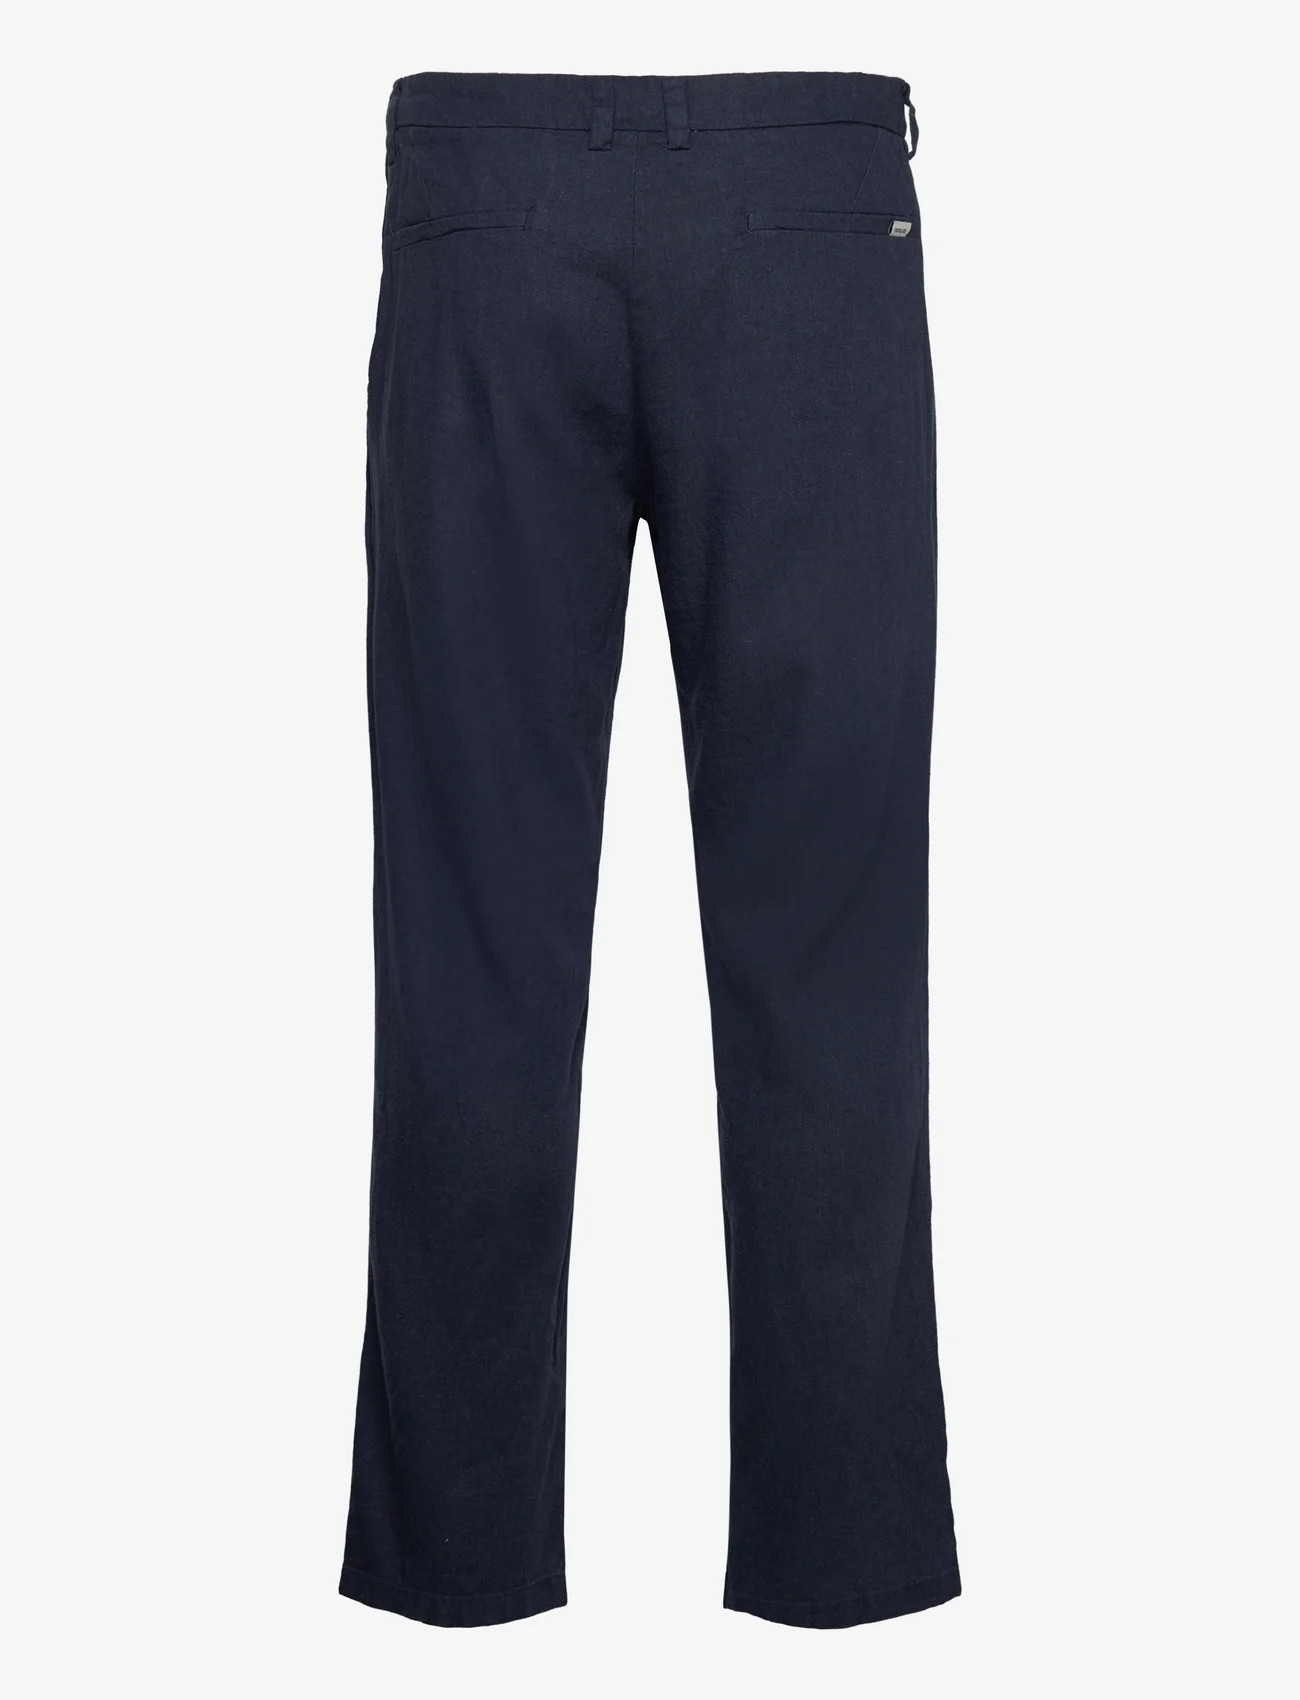 Solid - SDAllan Liam - linen trousers - insignia blue - 1